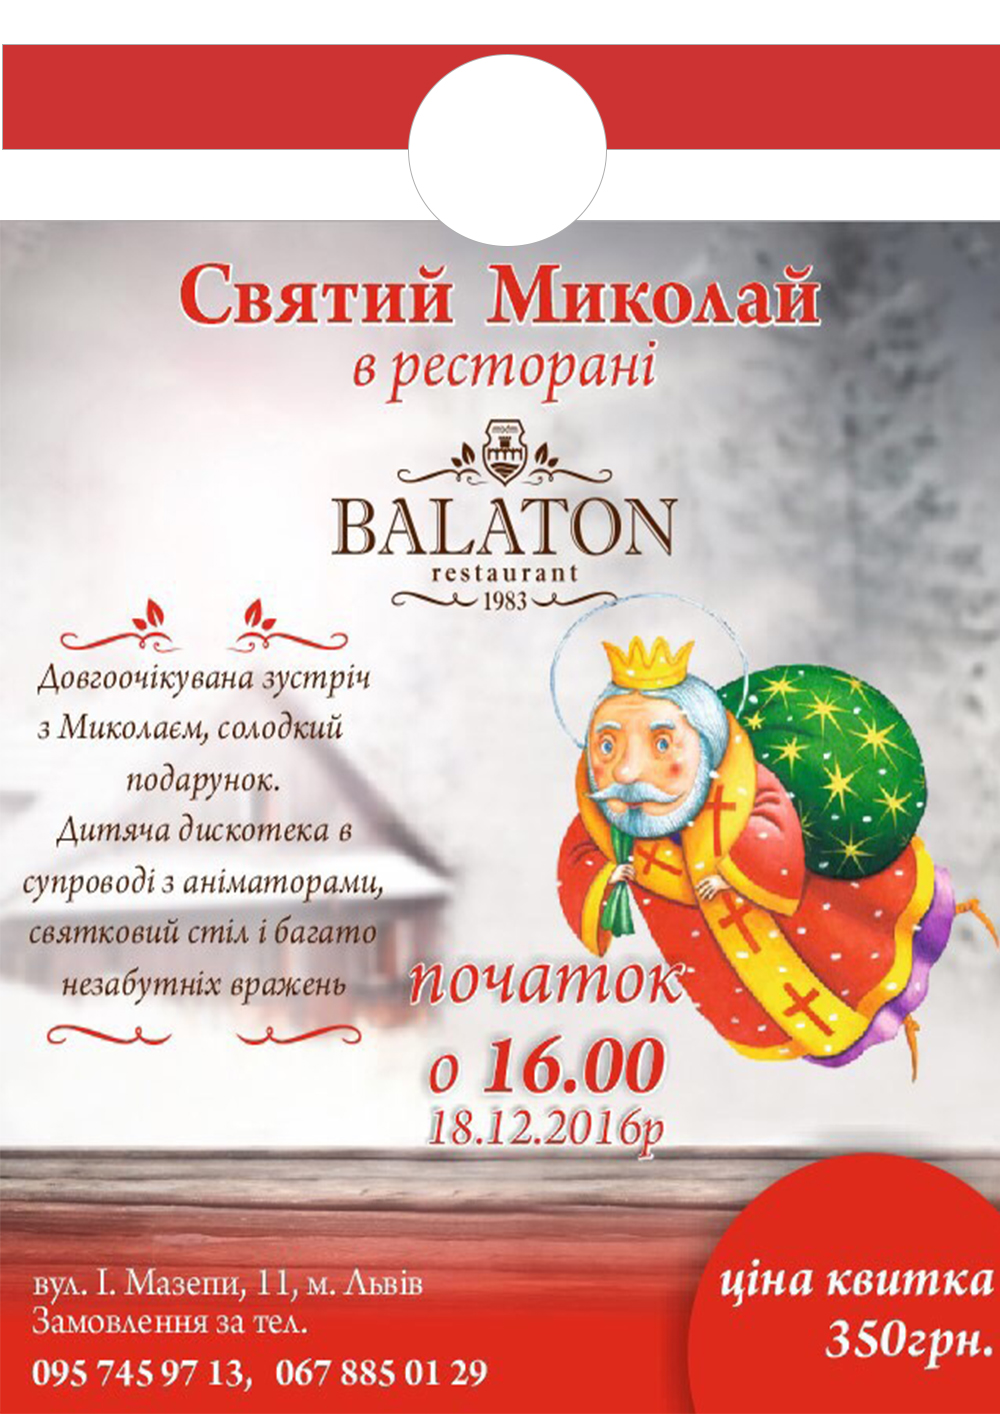 Святой Николай в ресторане Балатон